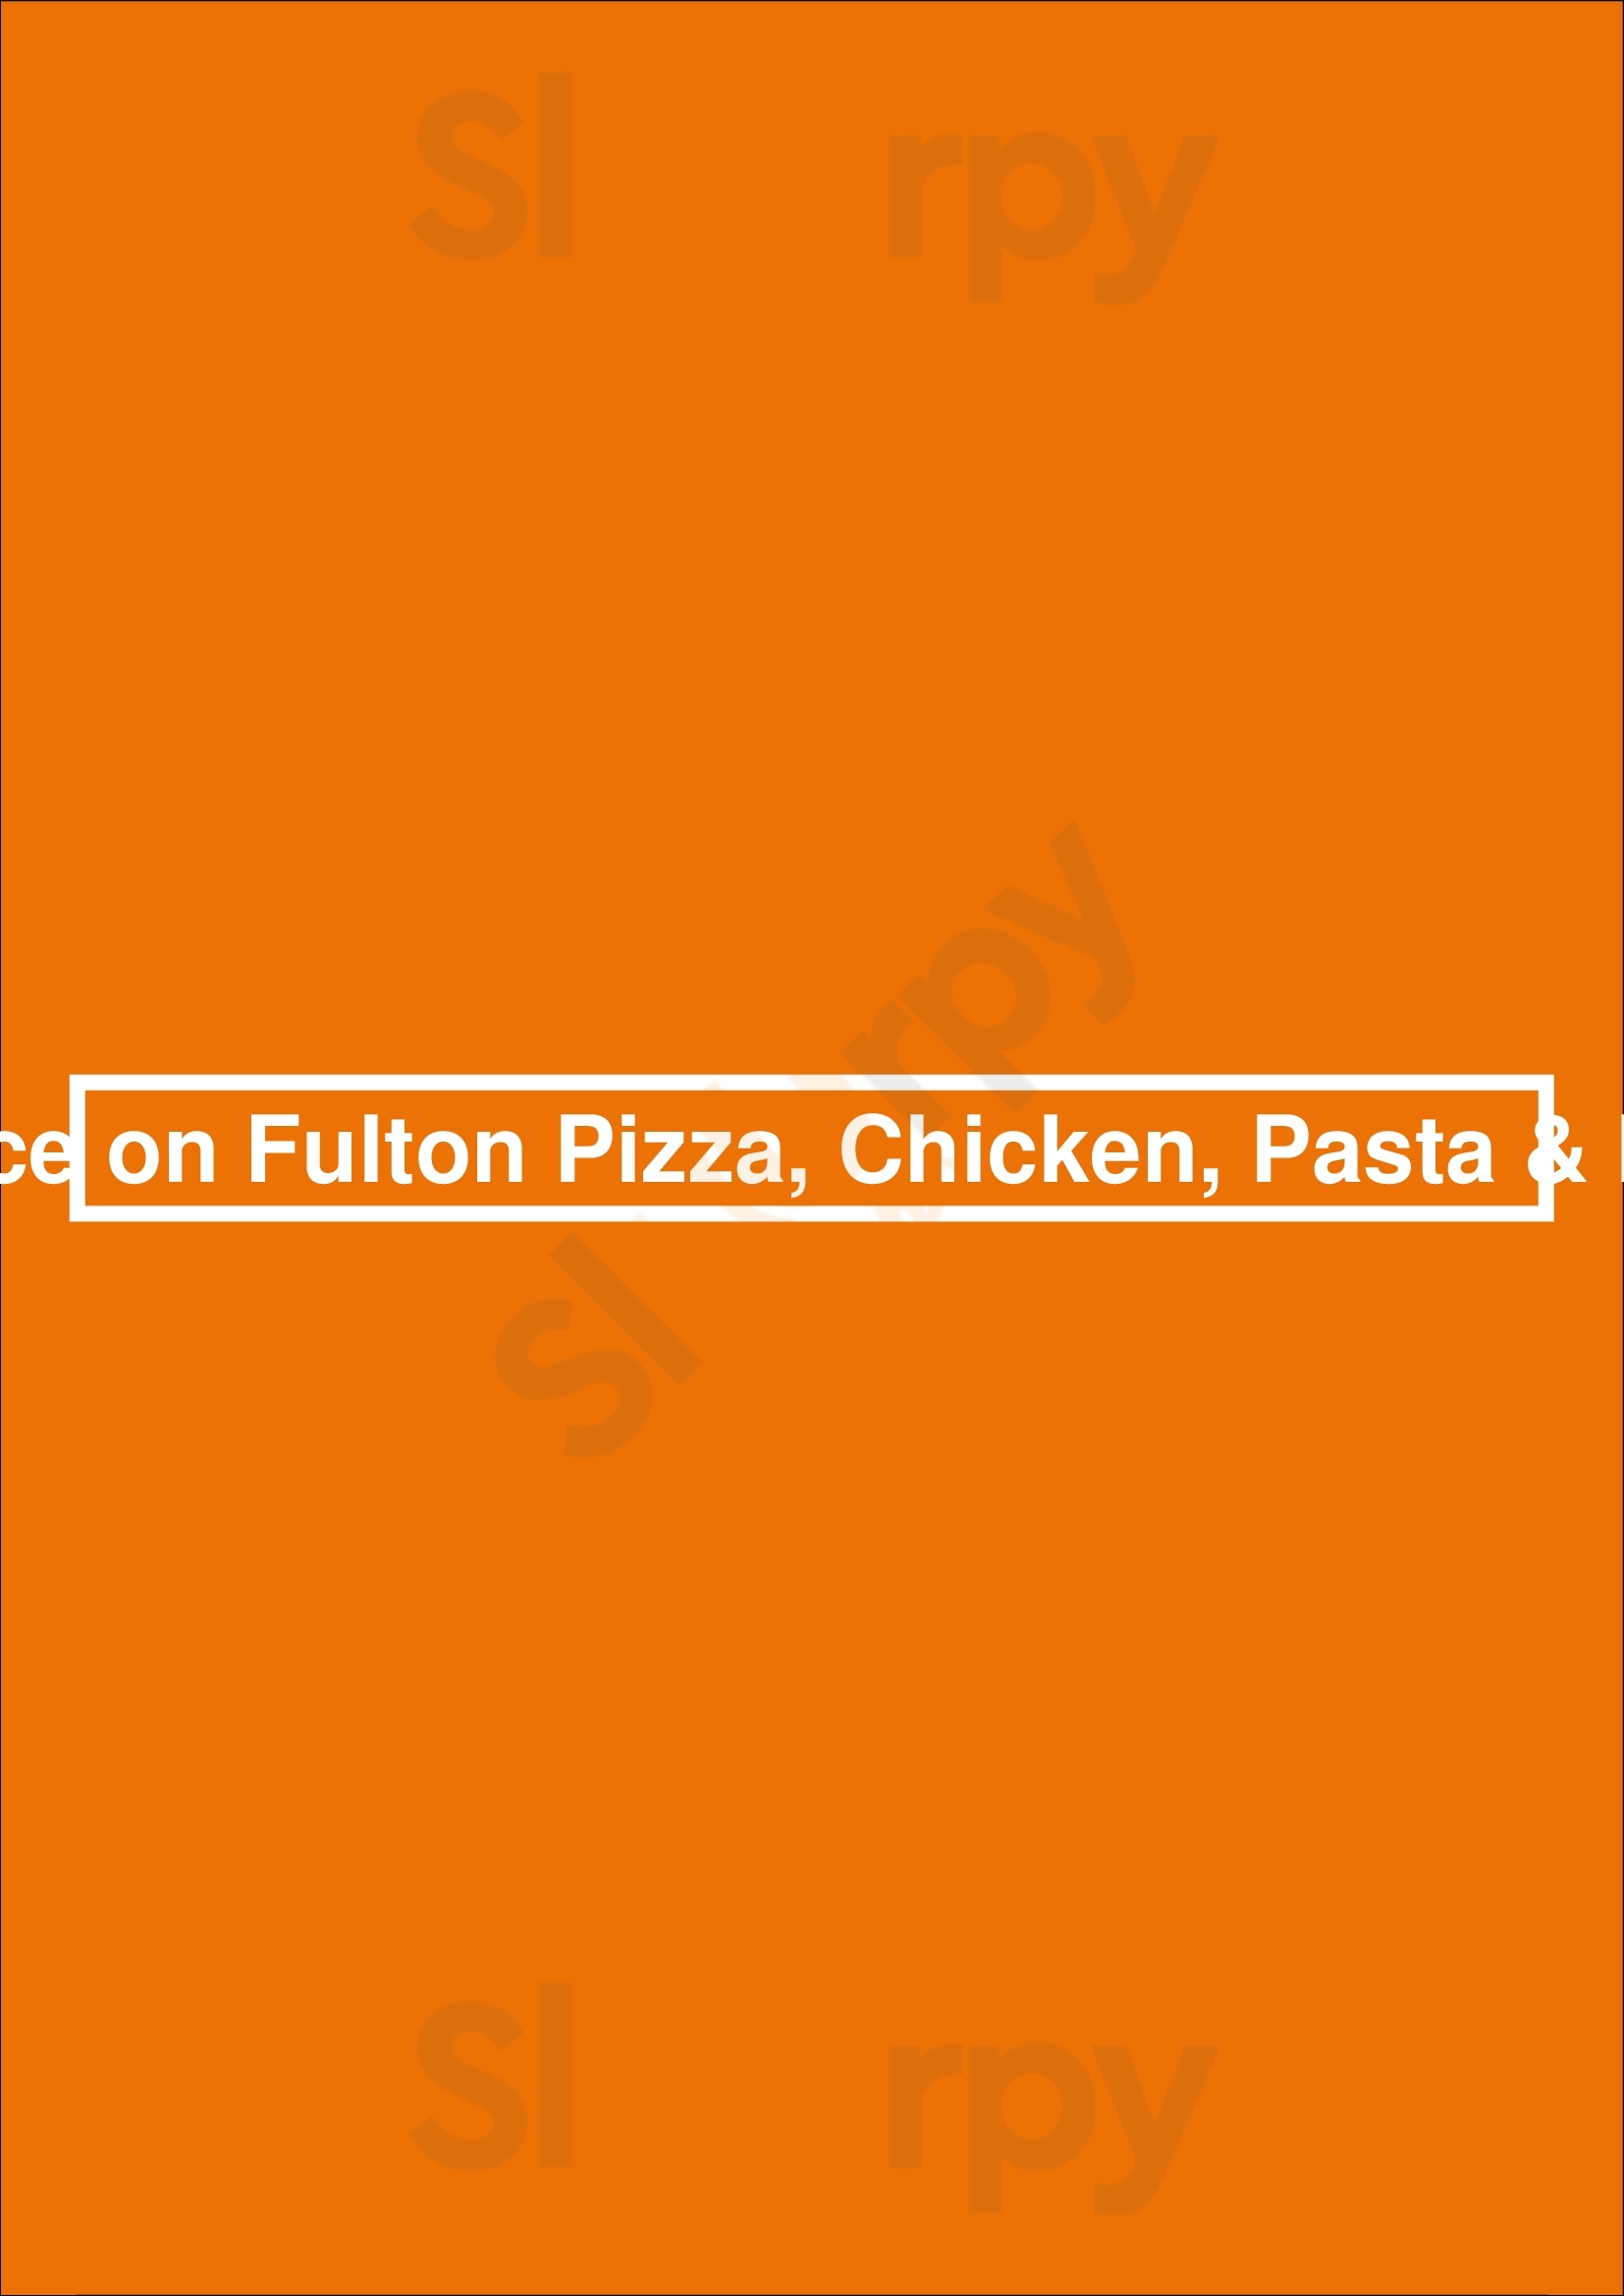 Palace On Fulton Pizza, Chicken, Pasta & Halal Brooklyn Menu - 1